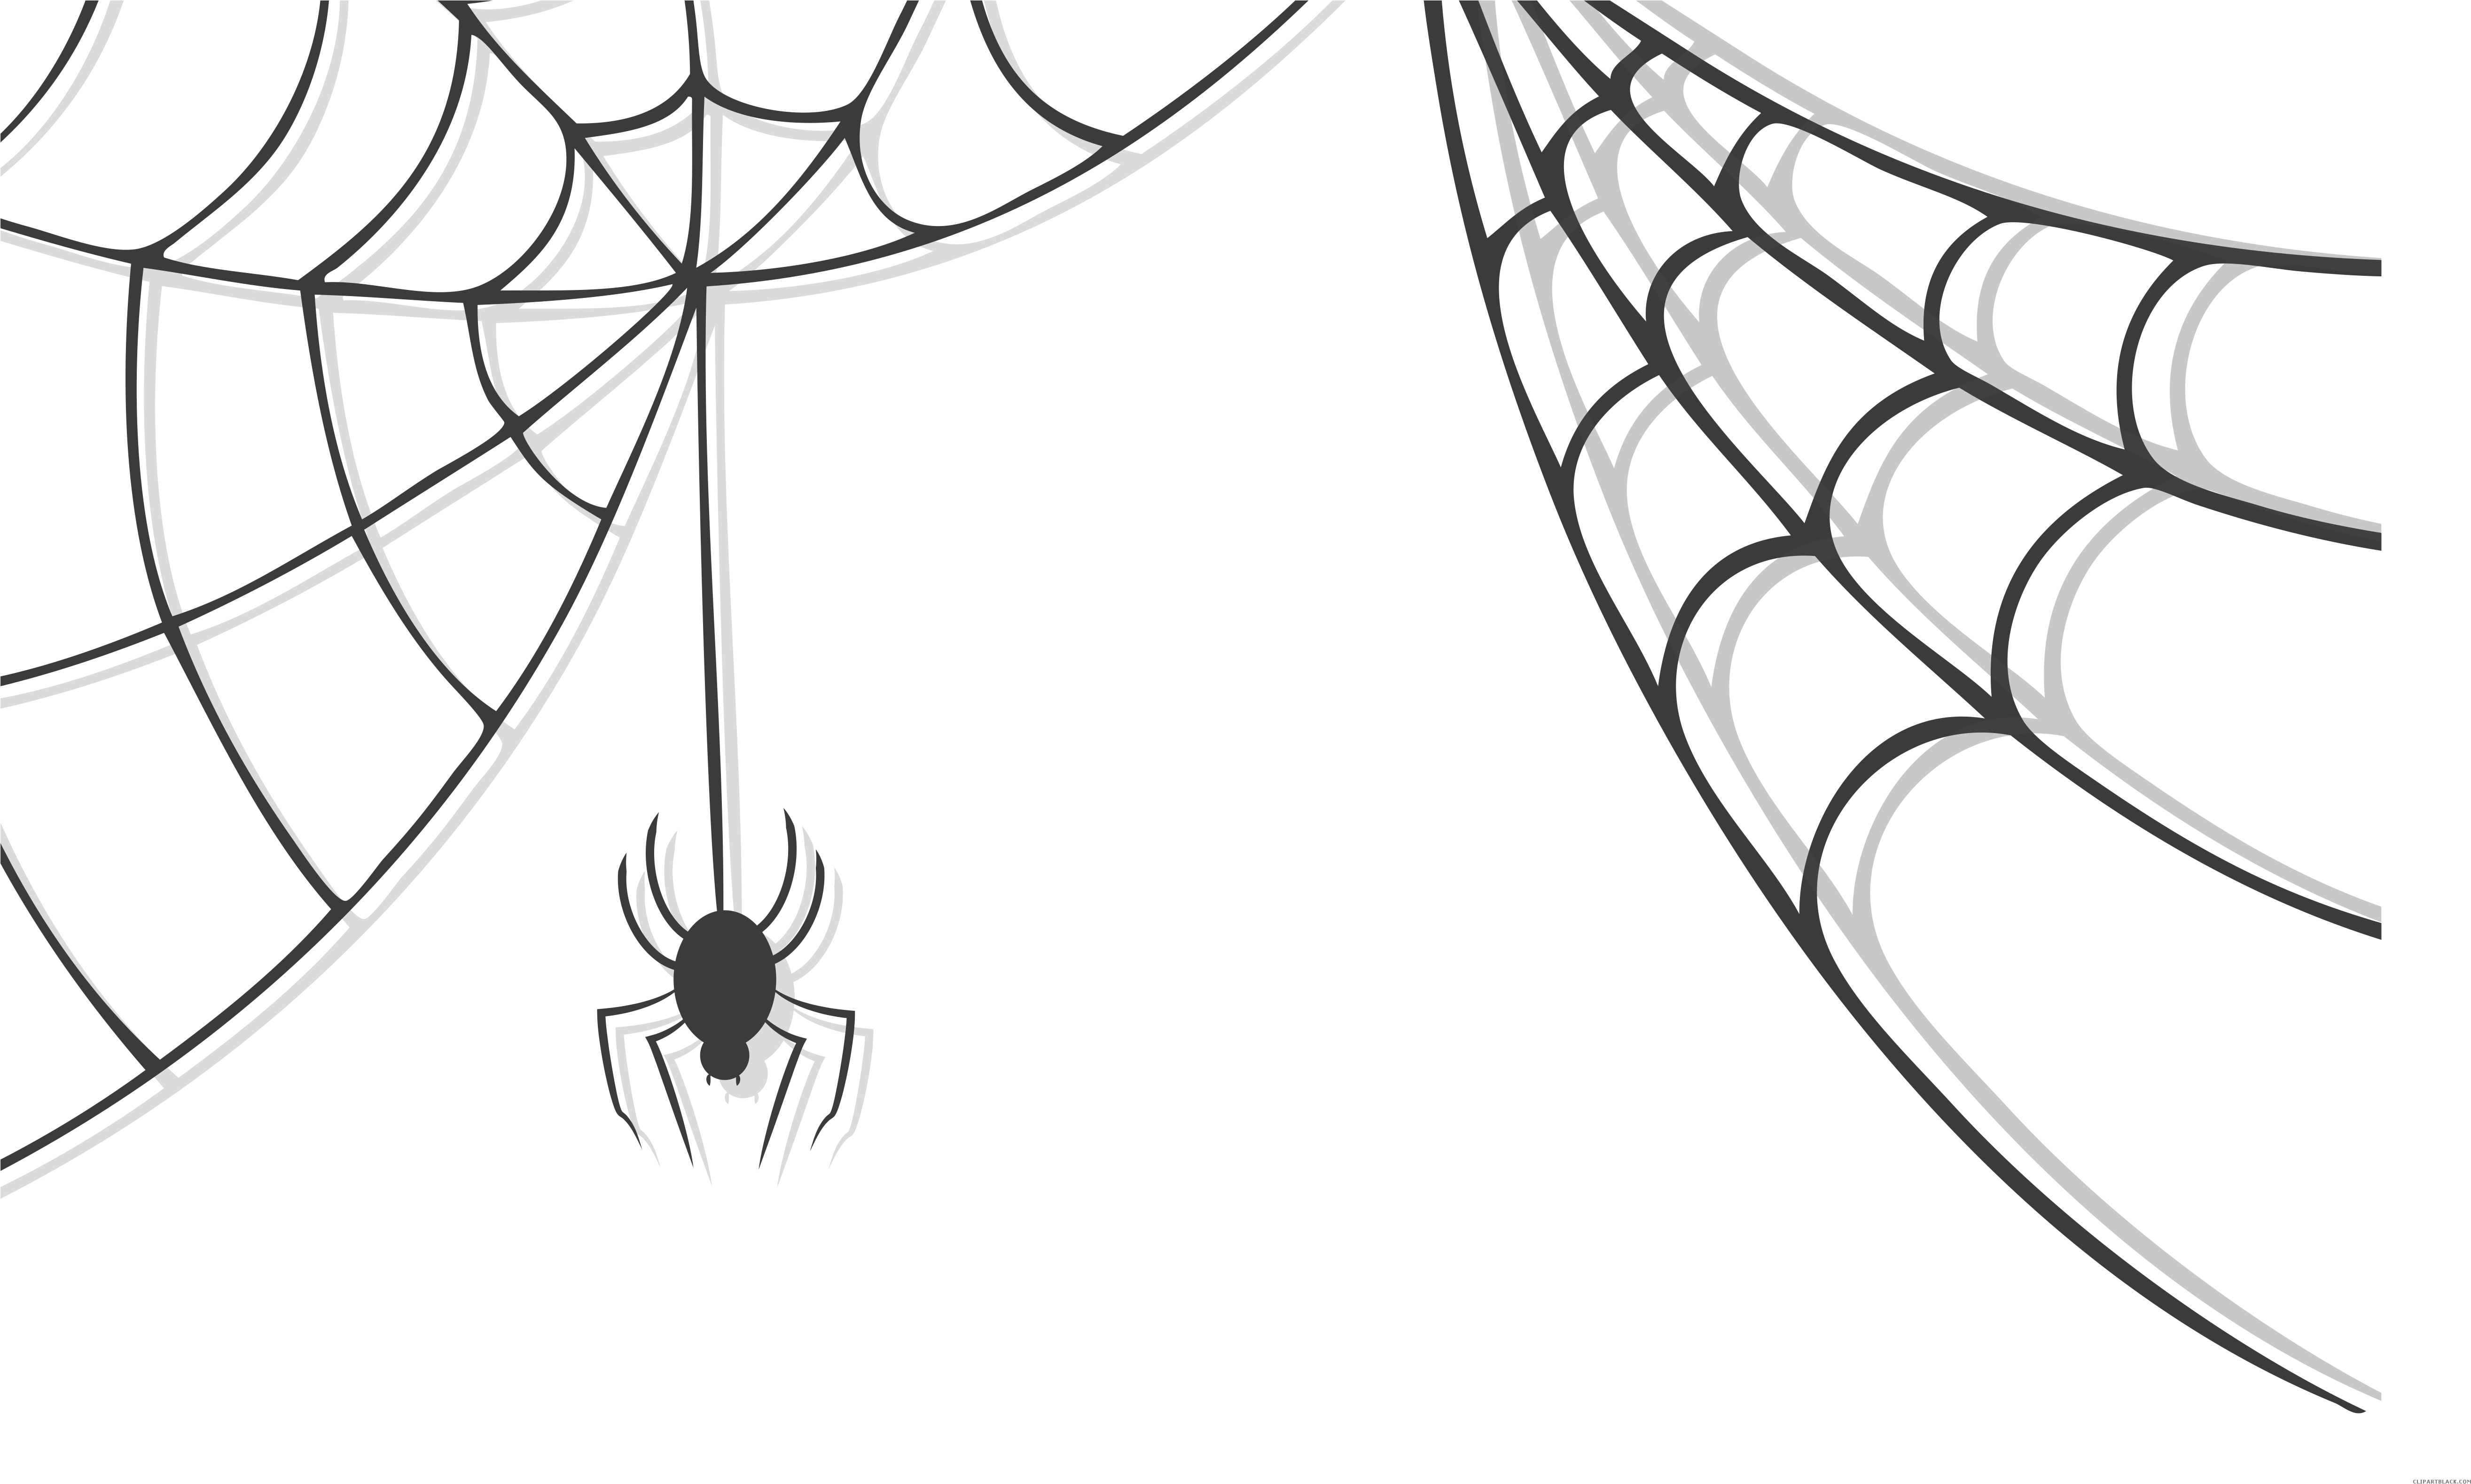 Spider Descending From Web